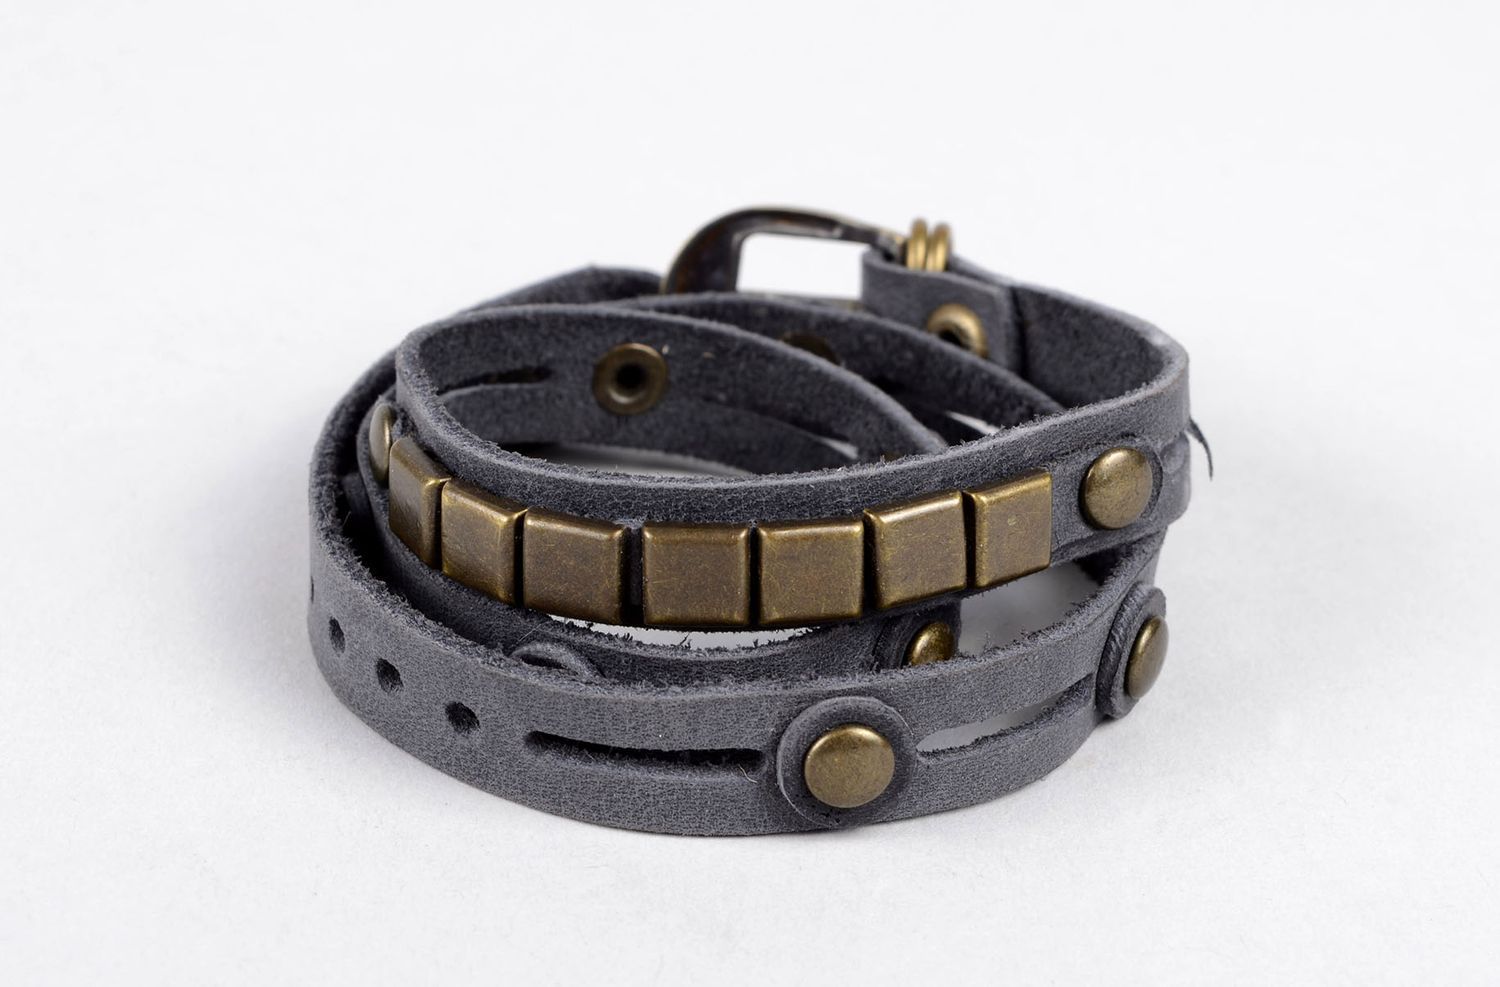 Unusual handmade leather bracelet unisex jewelry designs handmade gifts photo 1